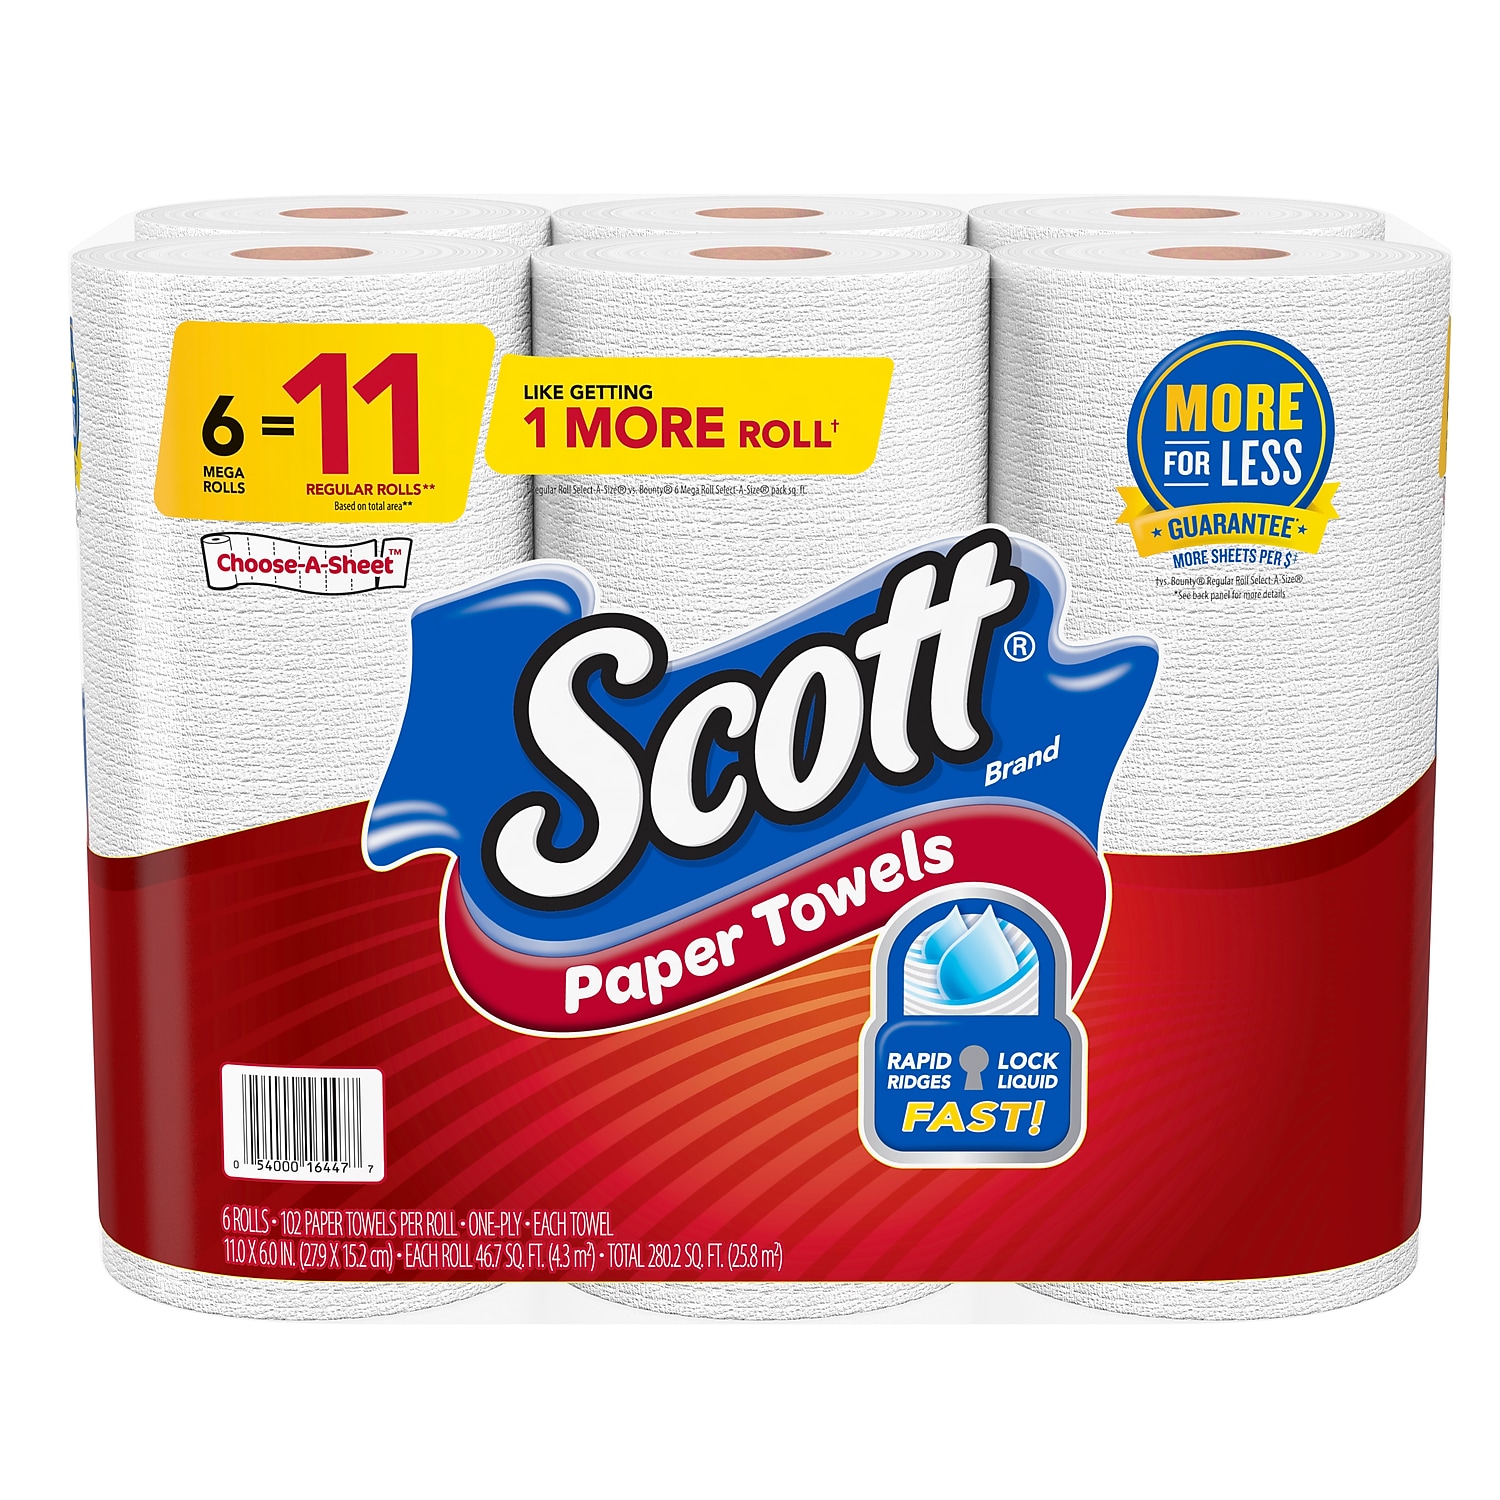 Scott Paper Towels, 6 Mega Rolls (11 Regular Rolls), Choose-A-Sheet - image 4 of 6